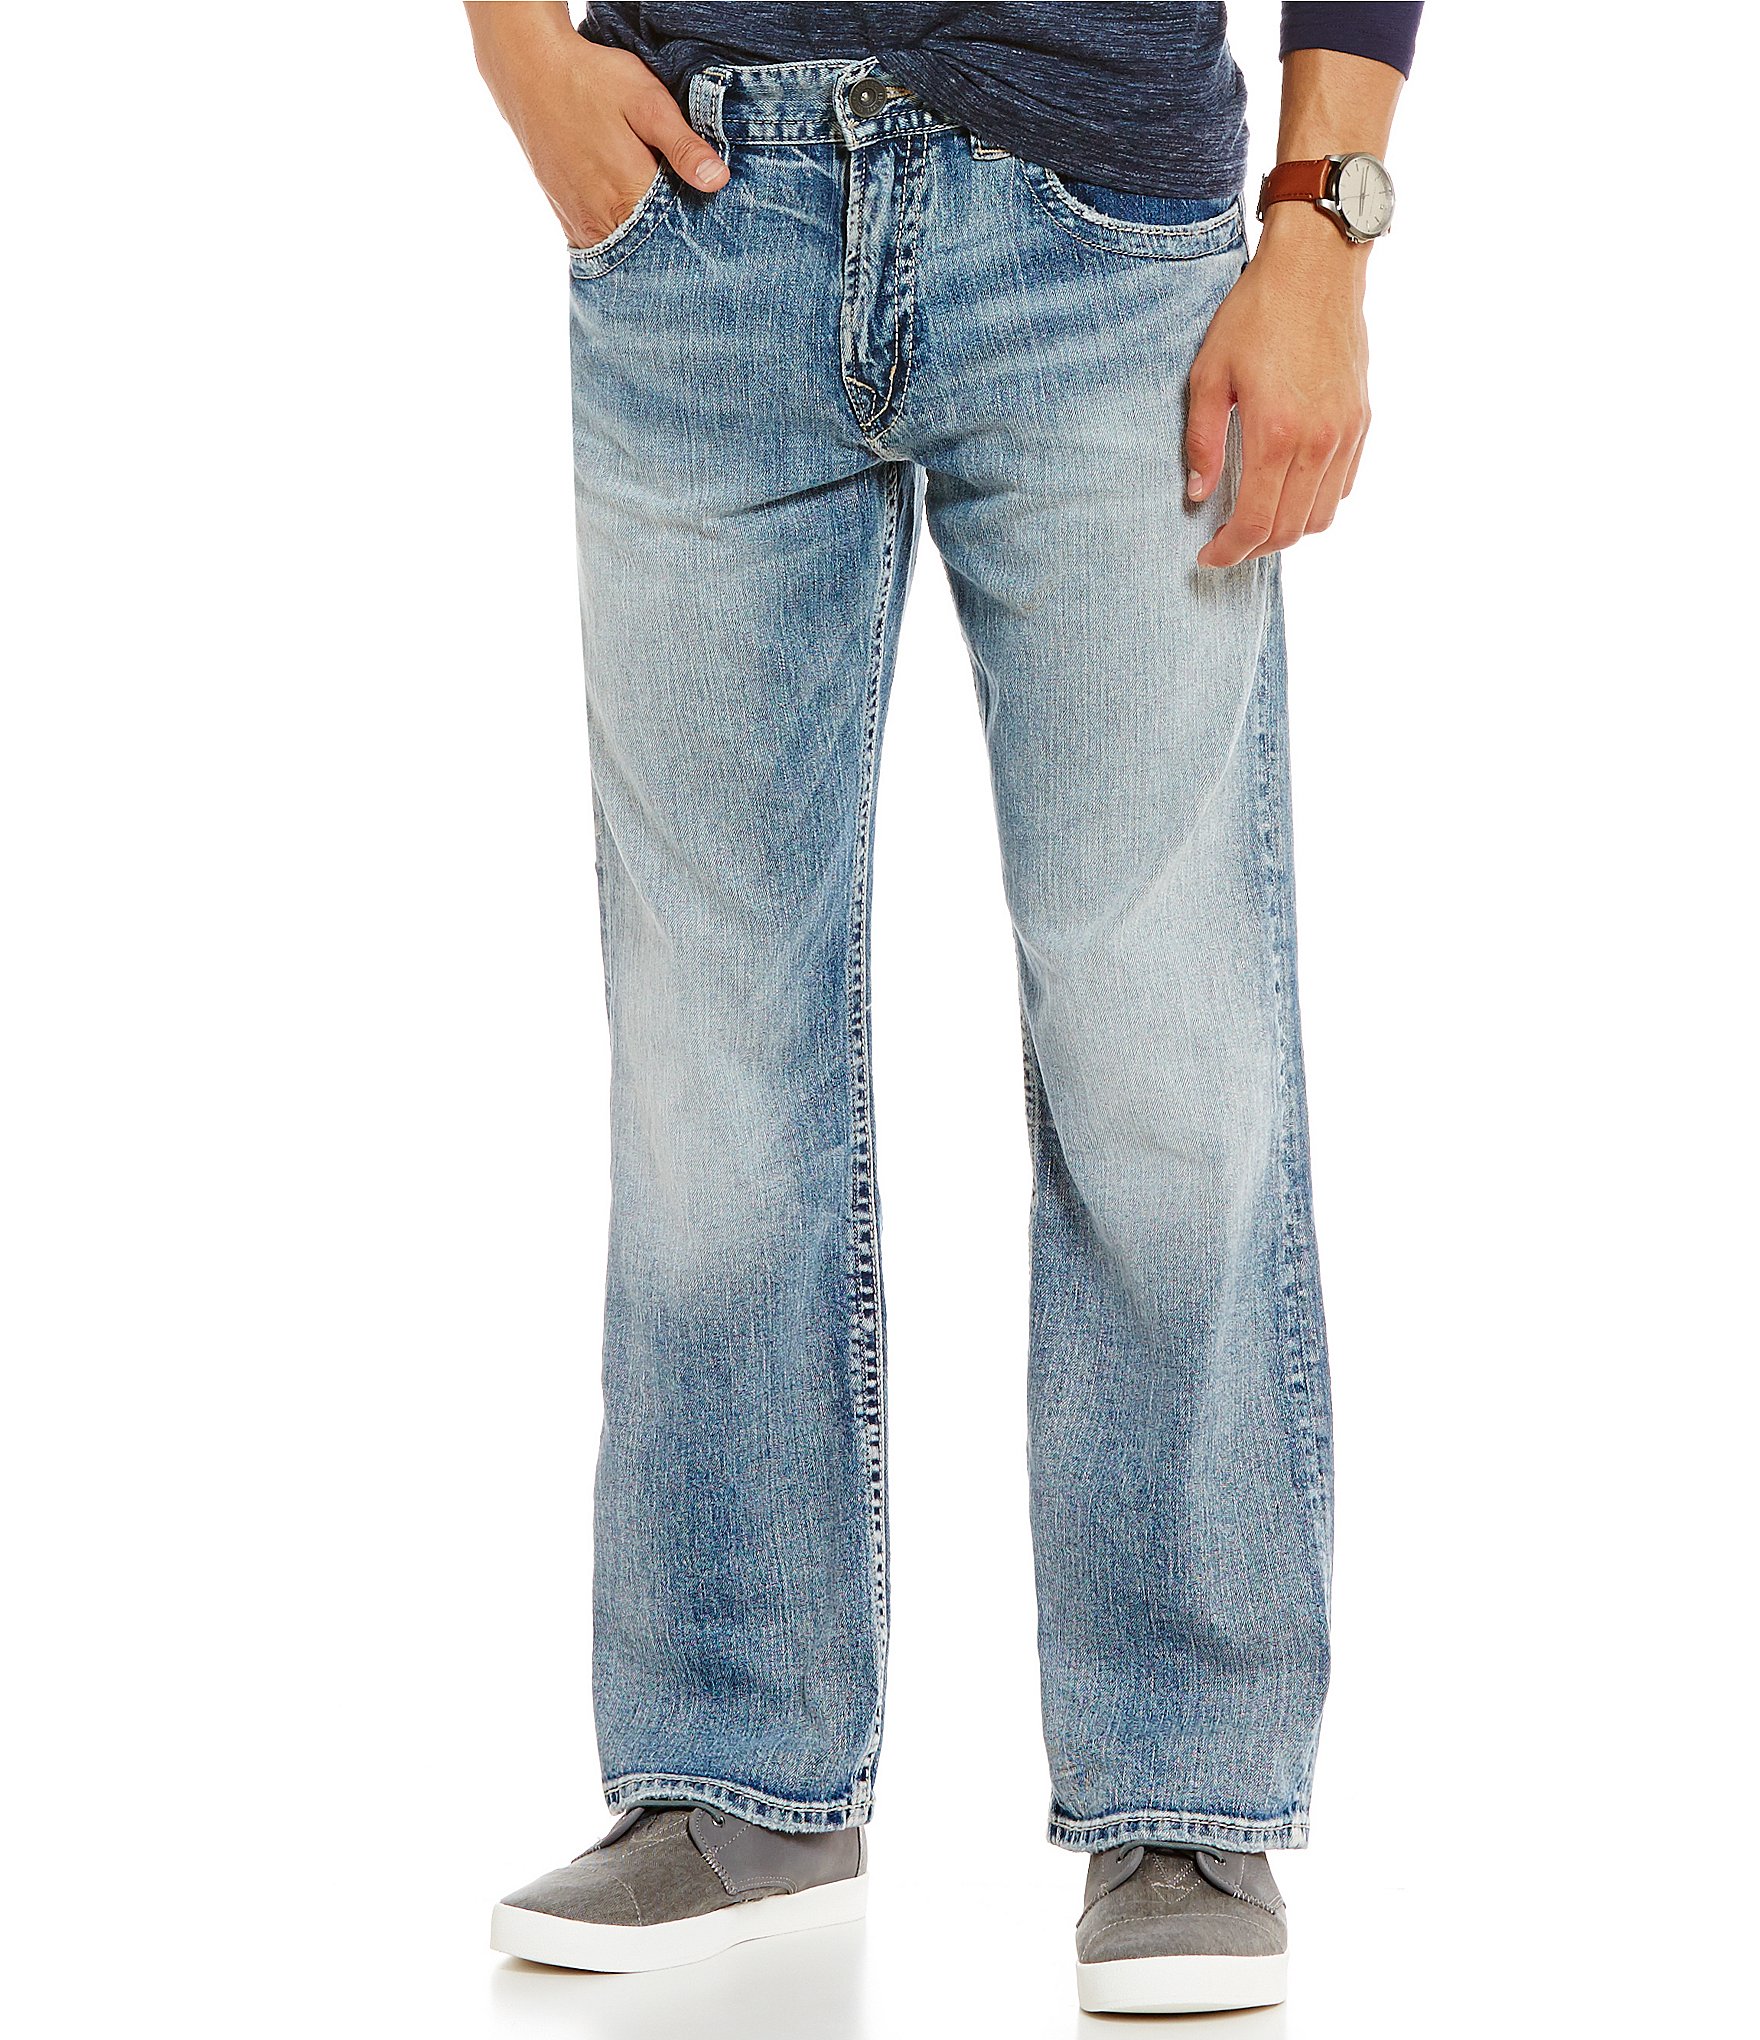 Men's Jeans | Dillards